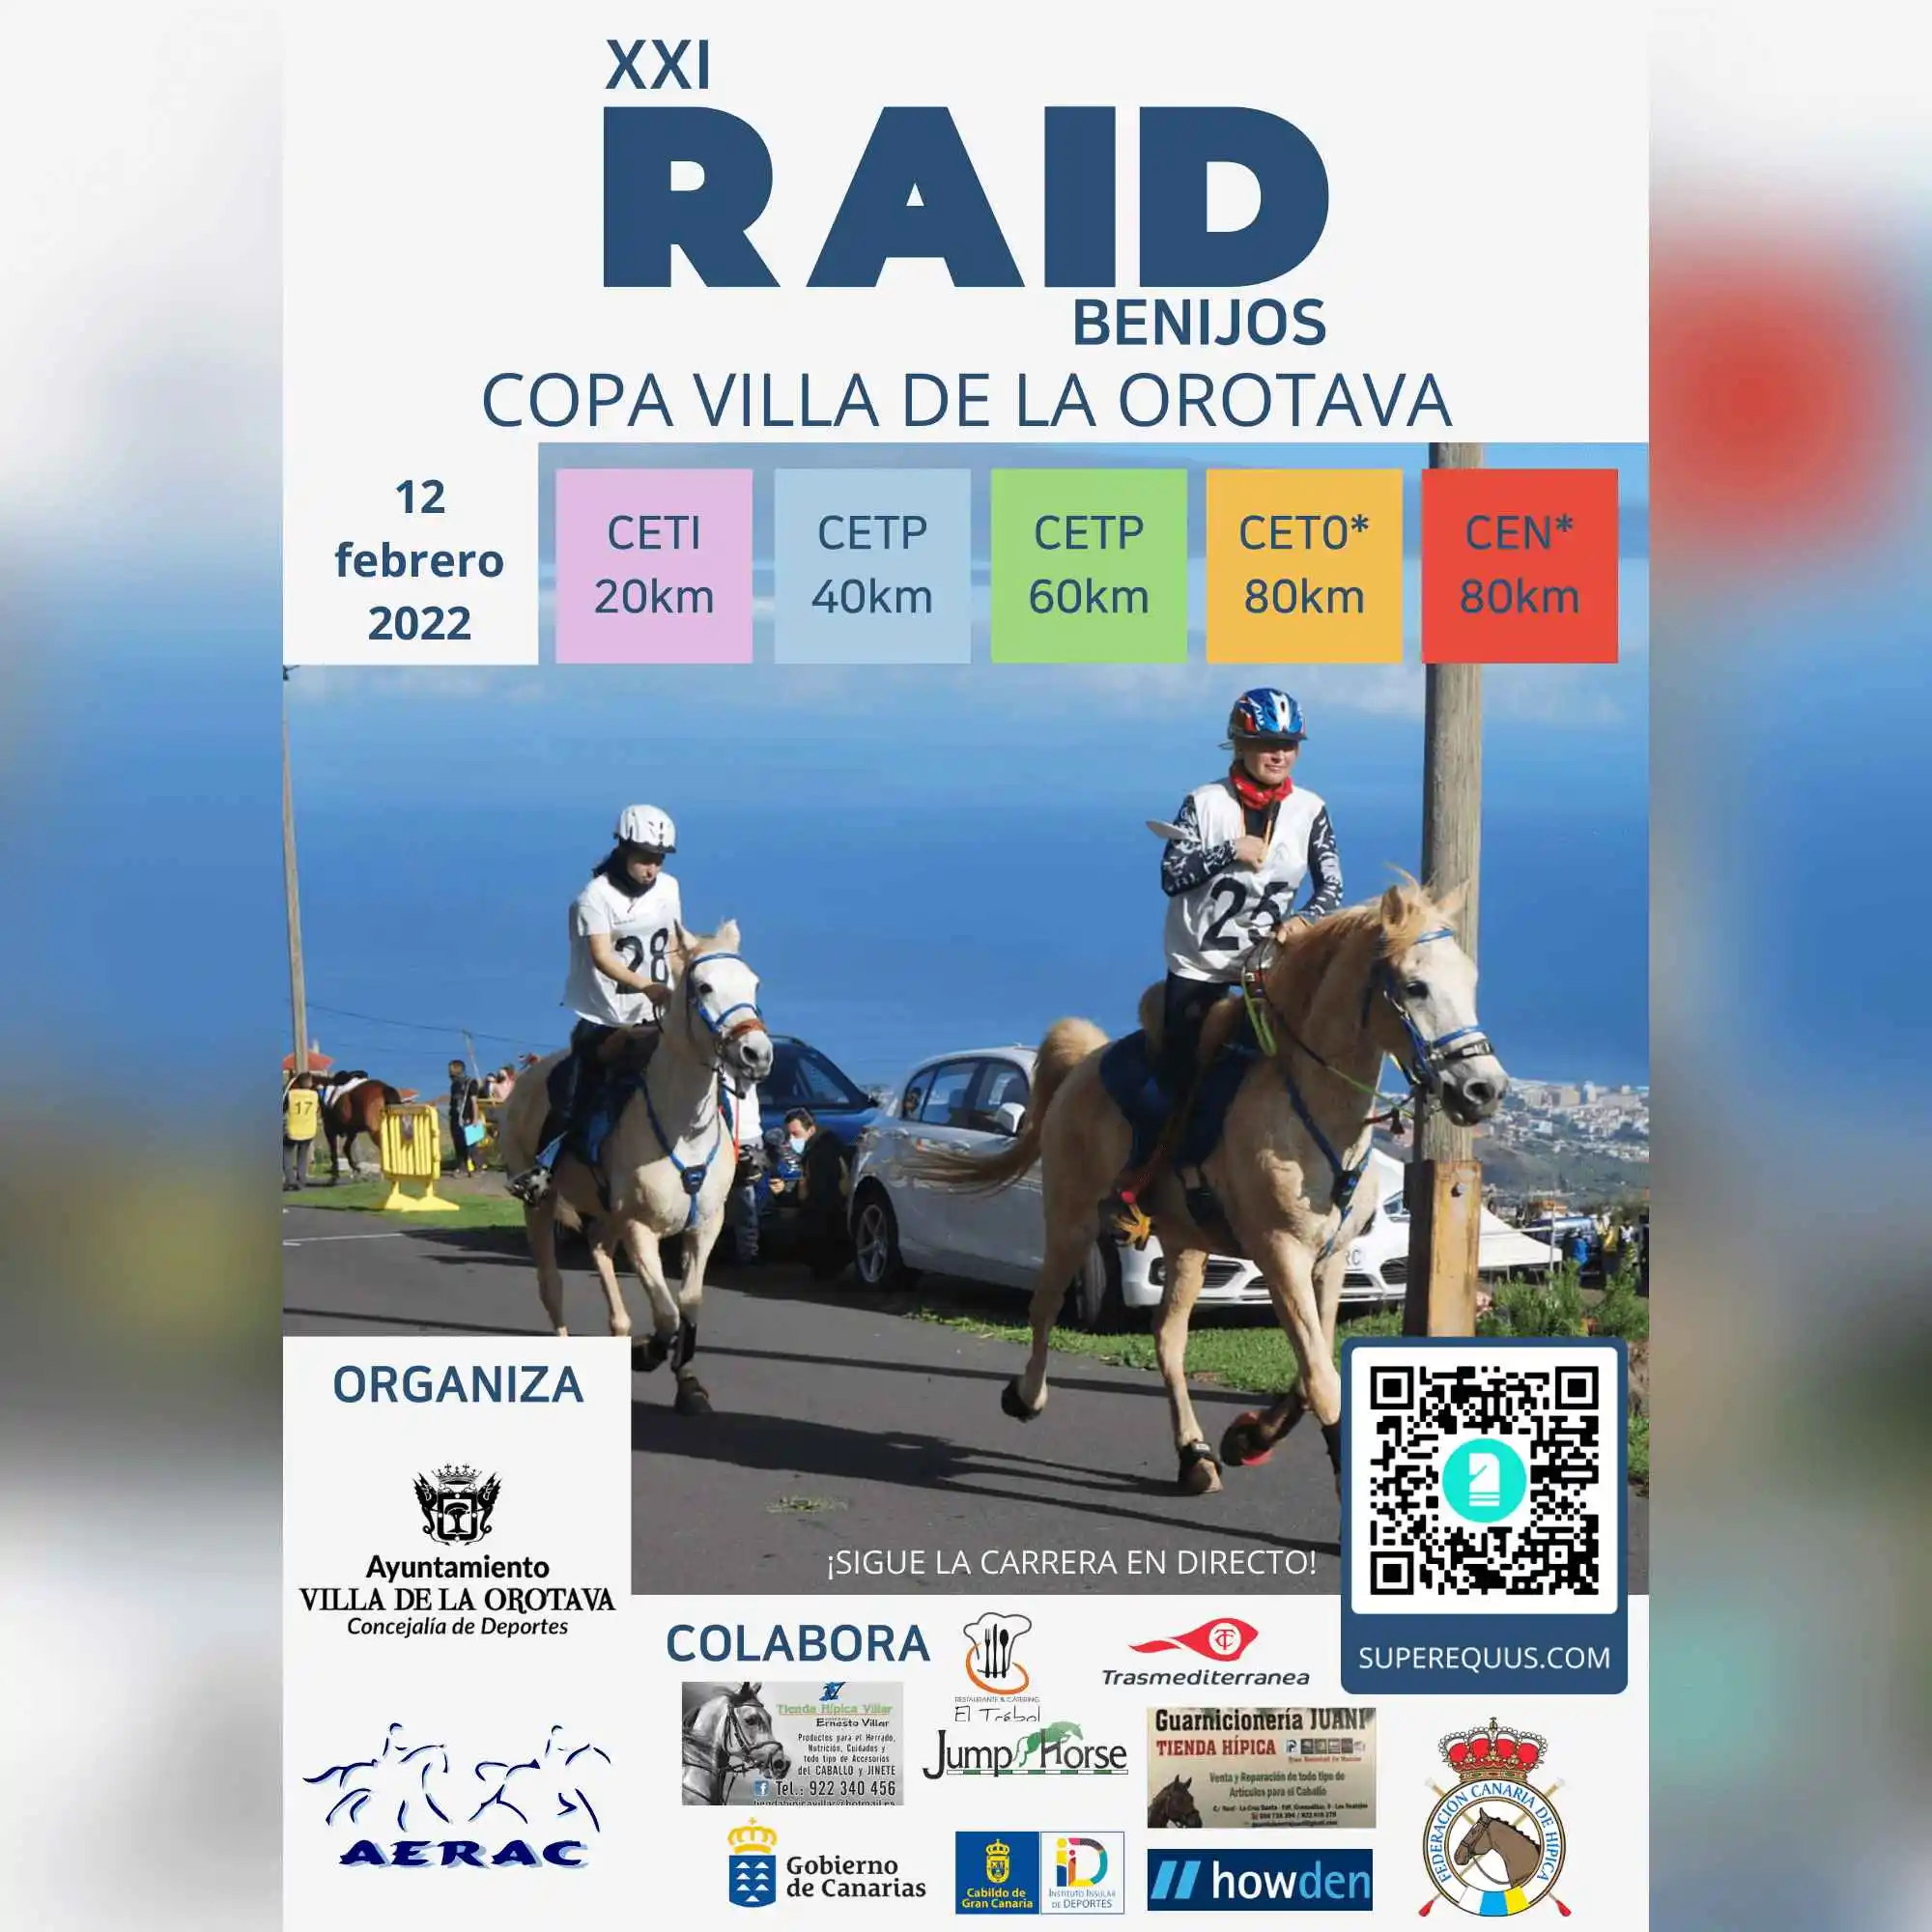 Poster of XXI Raid Benijos Copa Villa de la Orotava